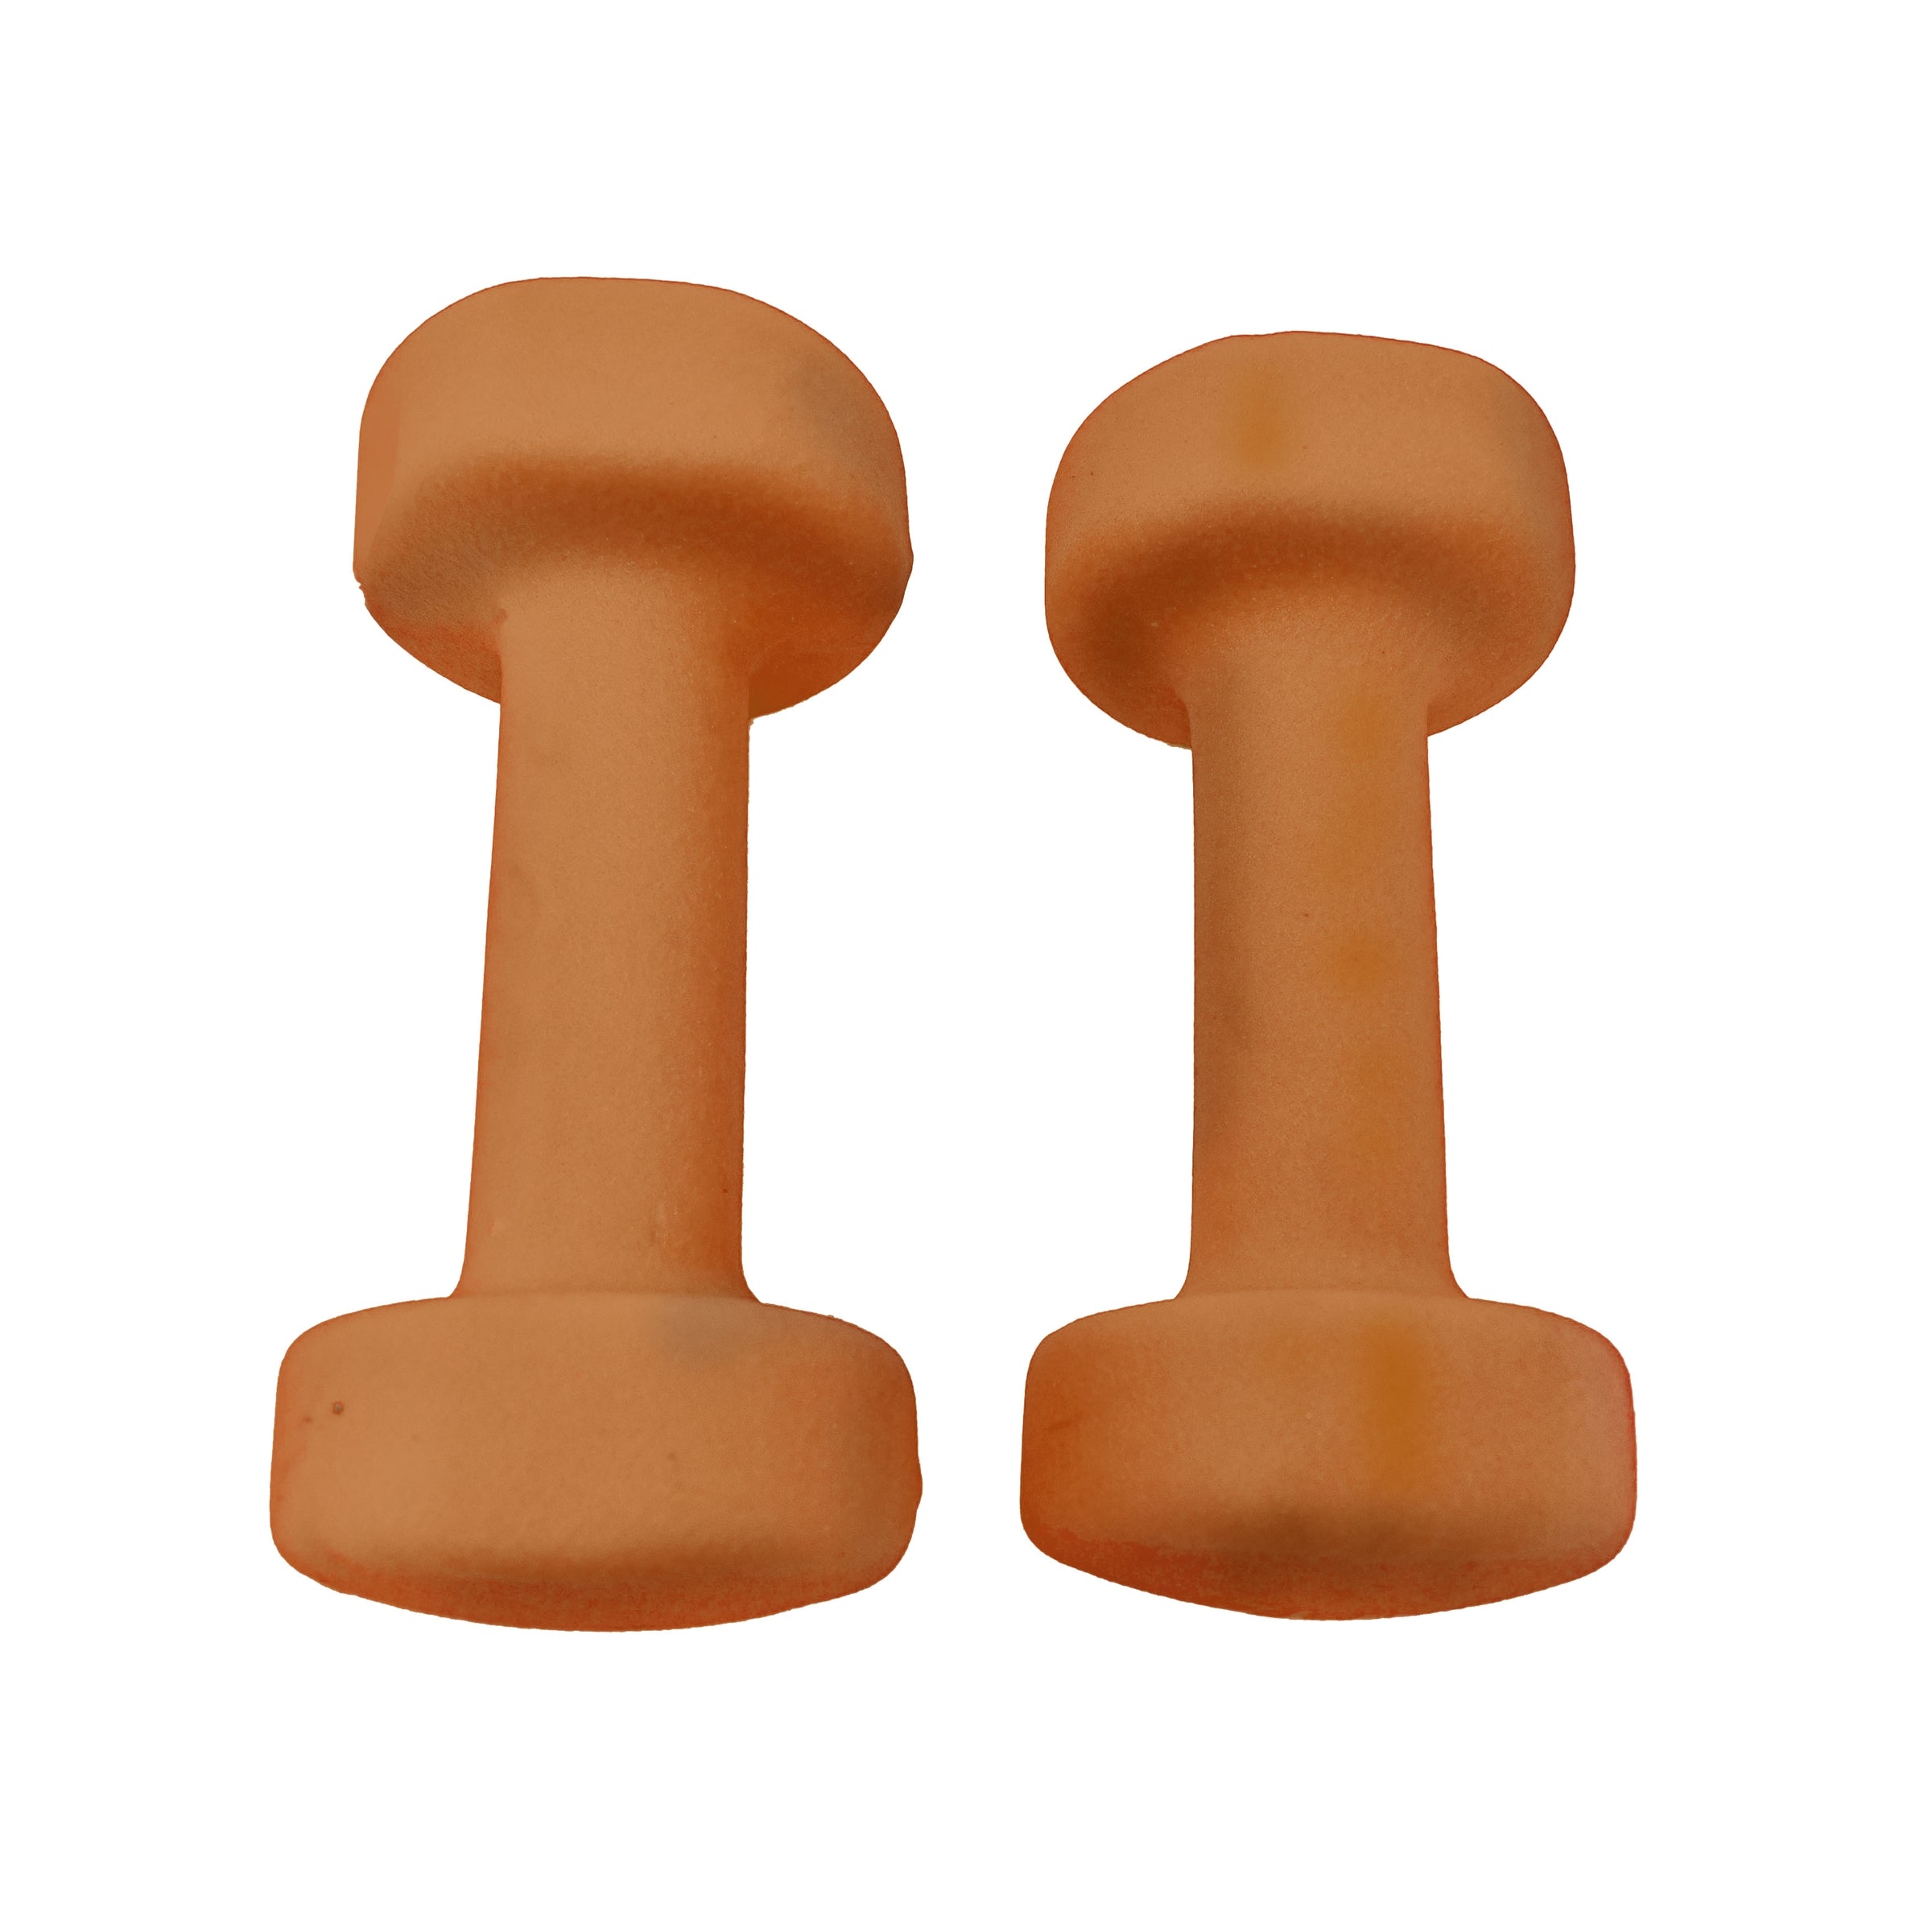 Non-Slip Hexagonal Shaped Free Weight Dumbbells - 7 lbs - Orange - Set of 2